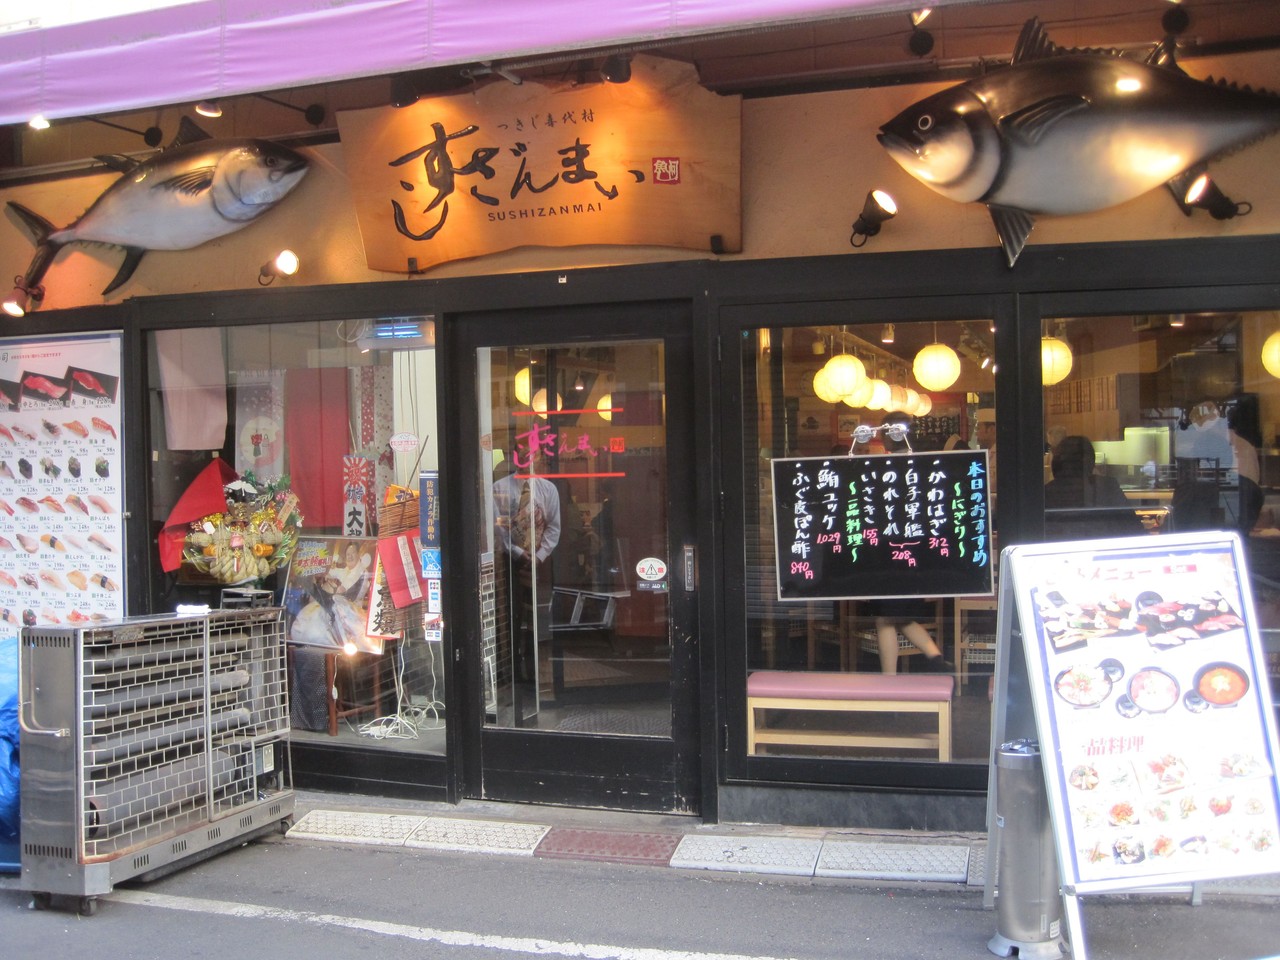 Sushizanmai - Best sushi restaurant in Tsukiji Tokyo - Picrumb